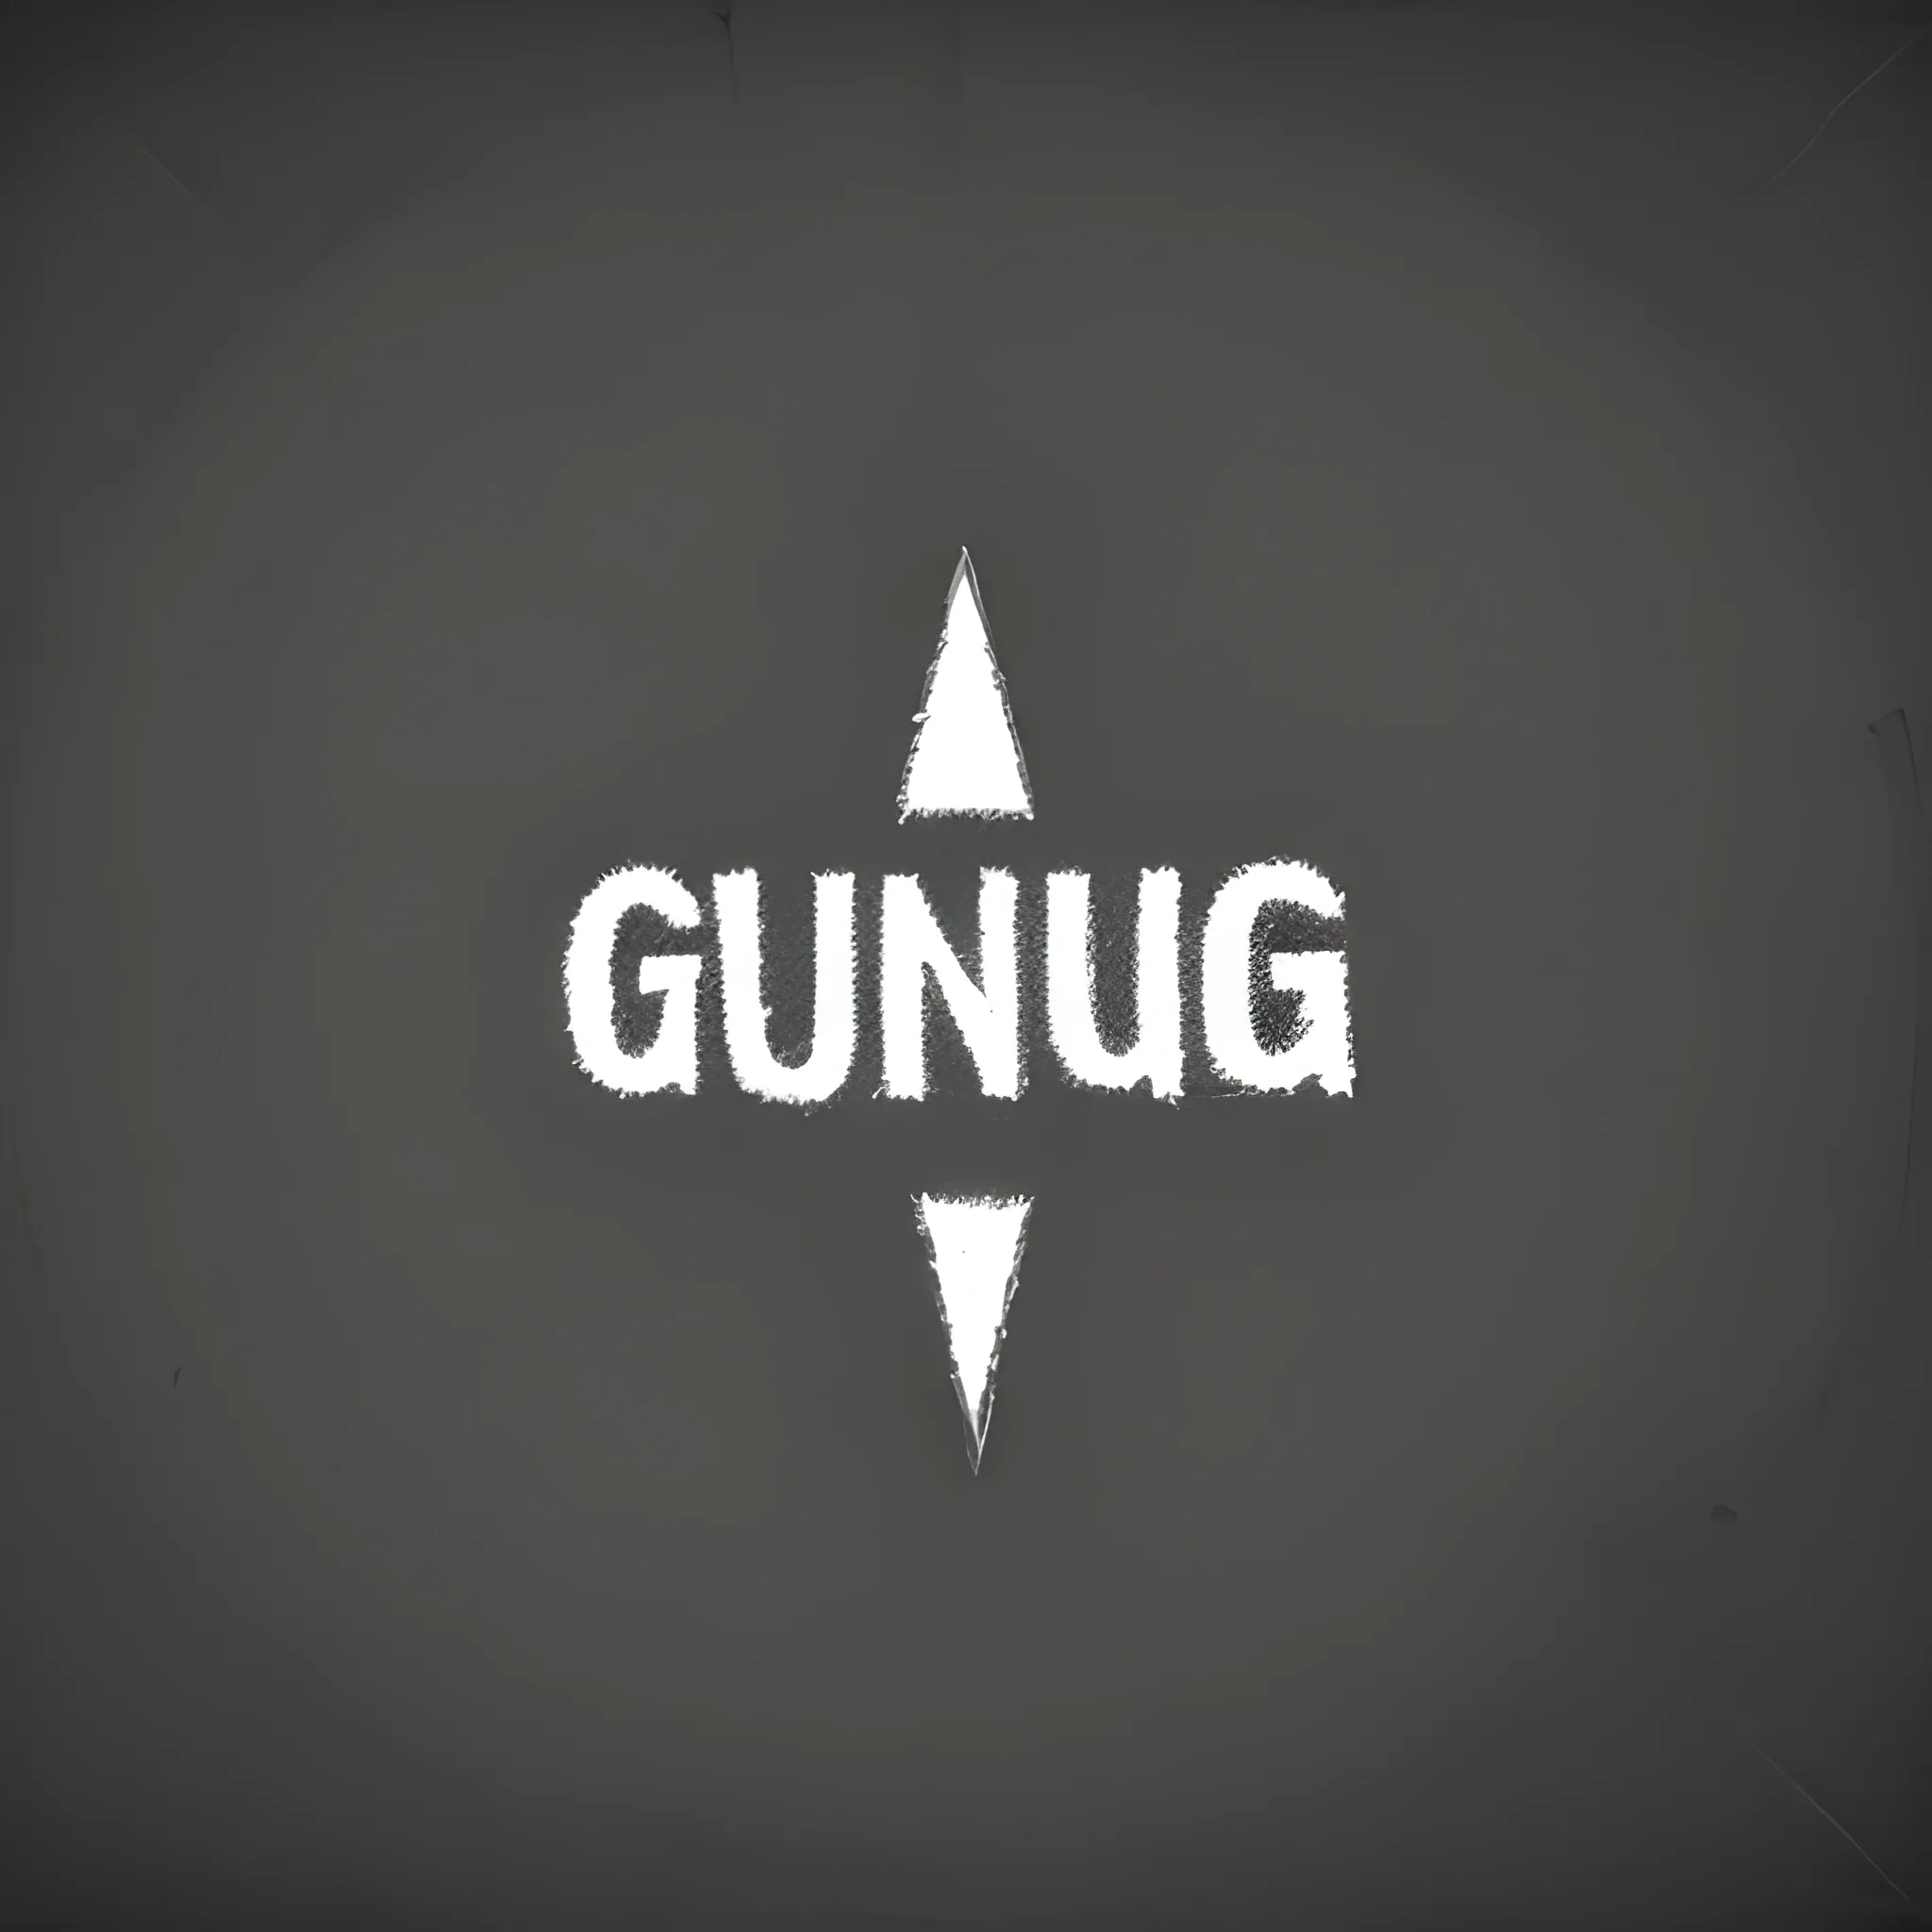 , Trippy, Pencil Sketch, word "Grunge" logo